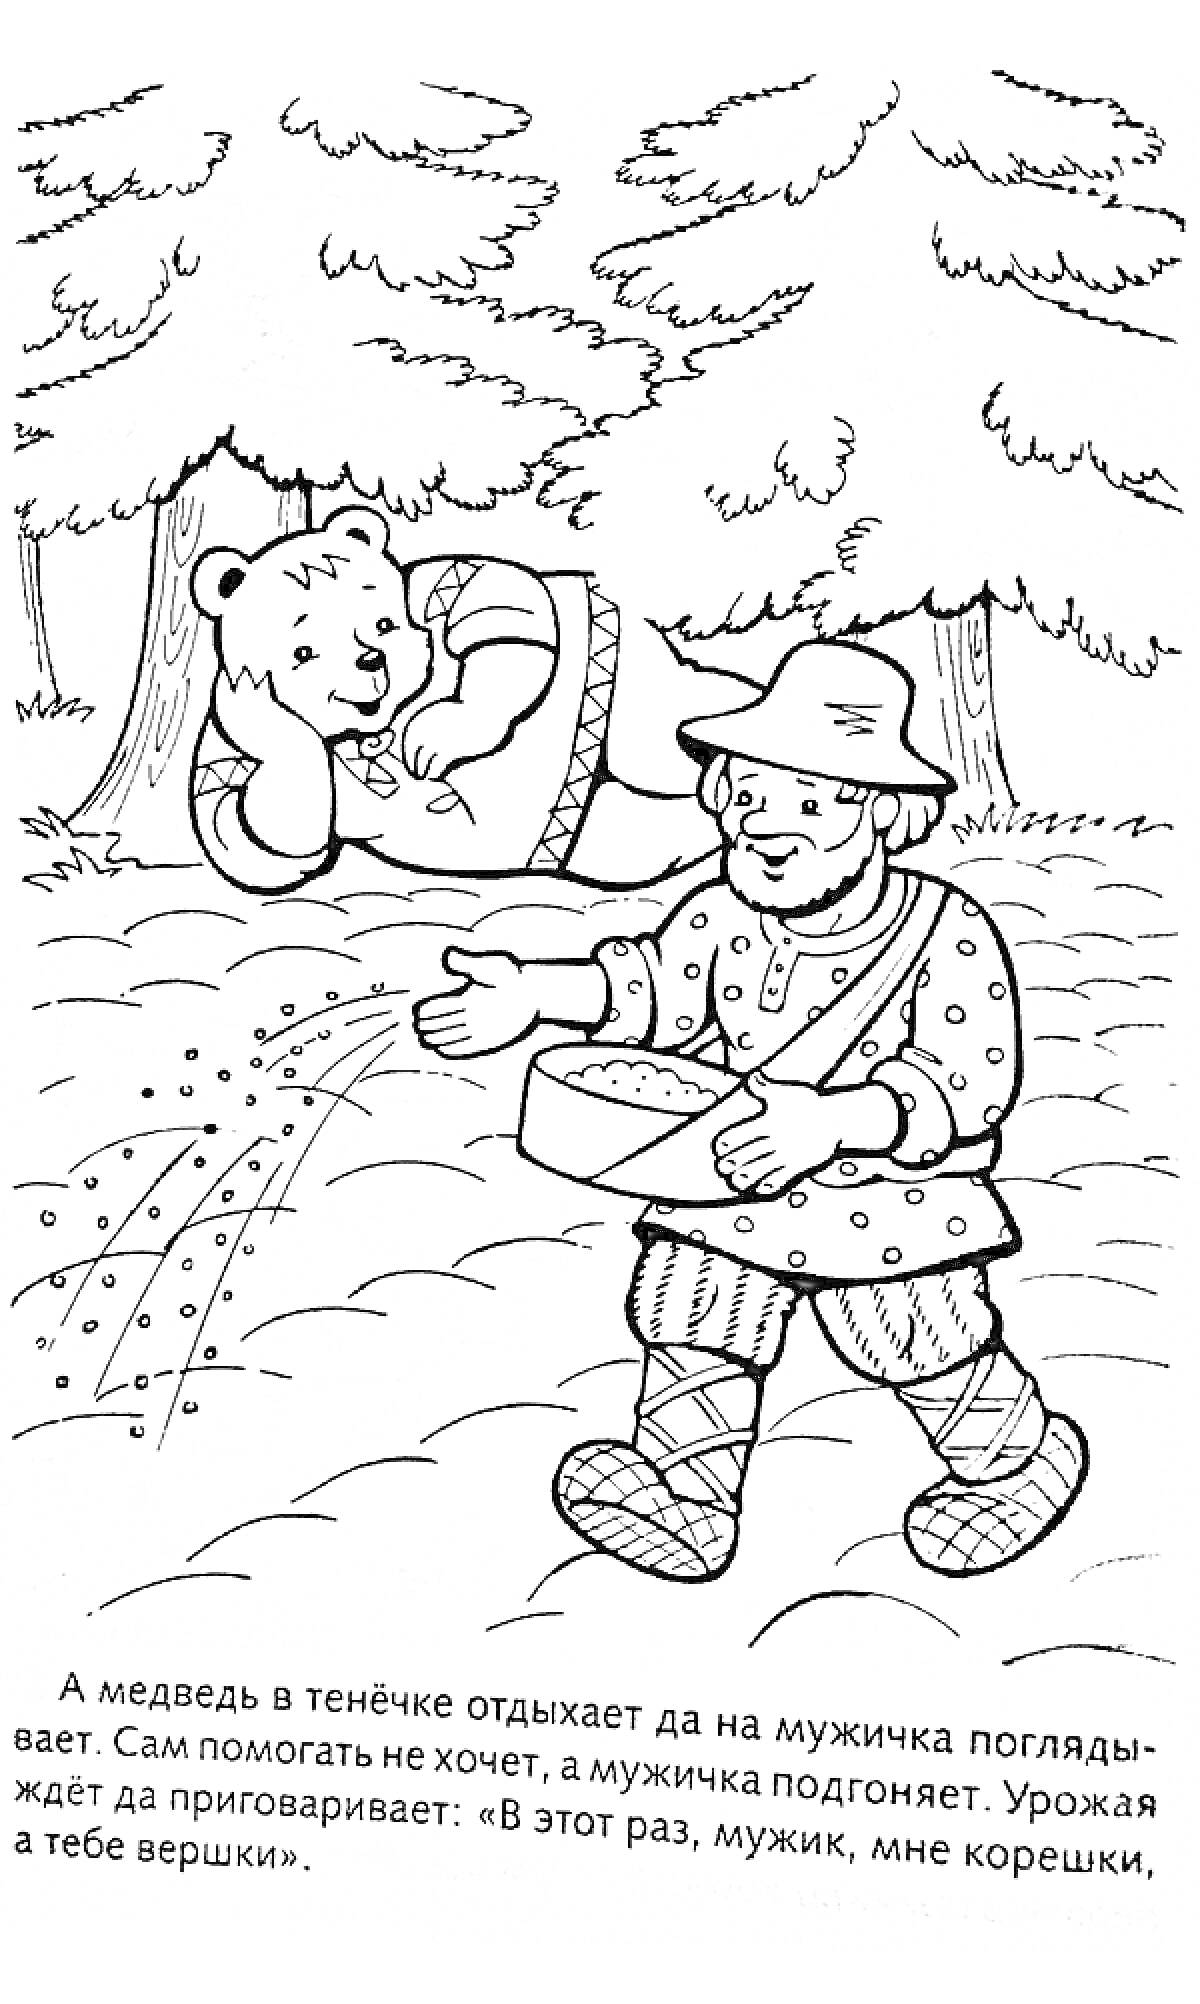  Мужик сеет семена, а медведь отдыхает под деревом.